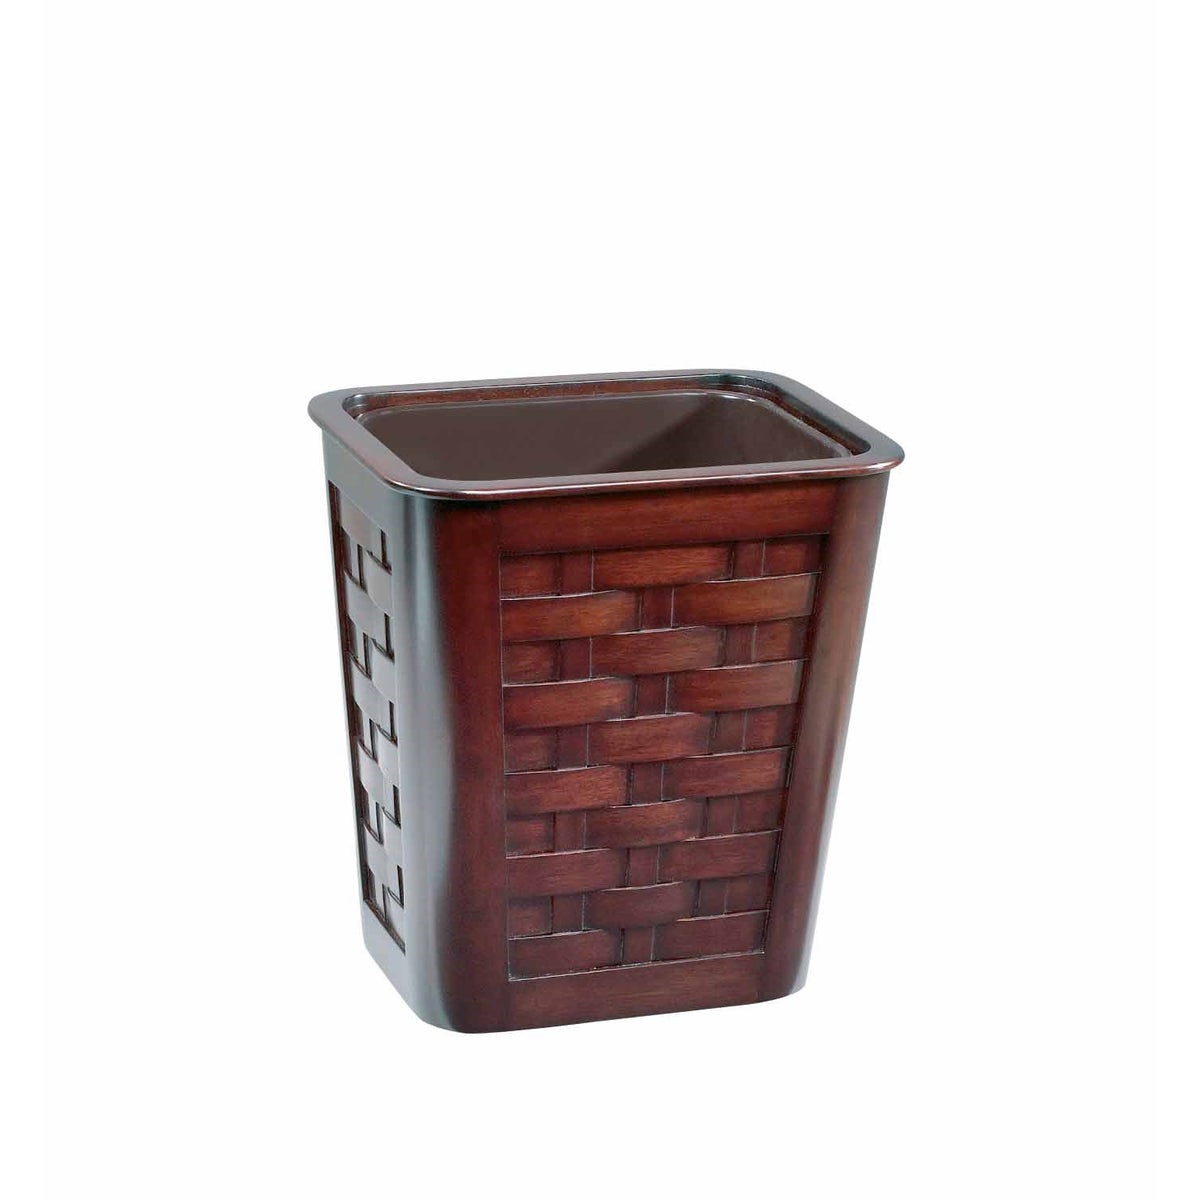 Woven Small Wastebasket in Mahogany